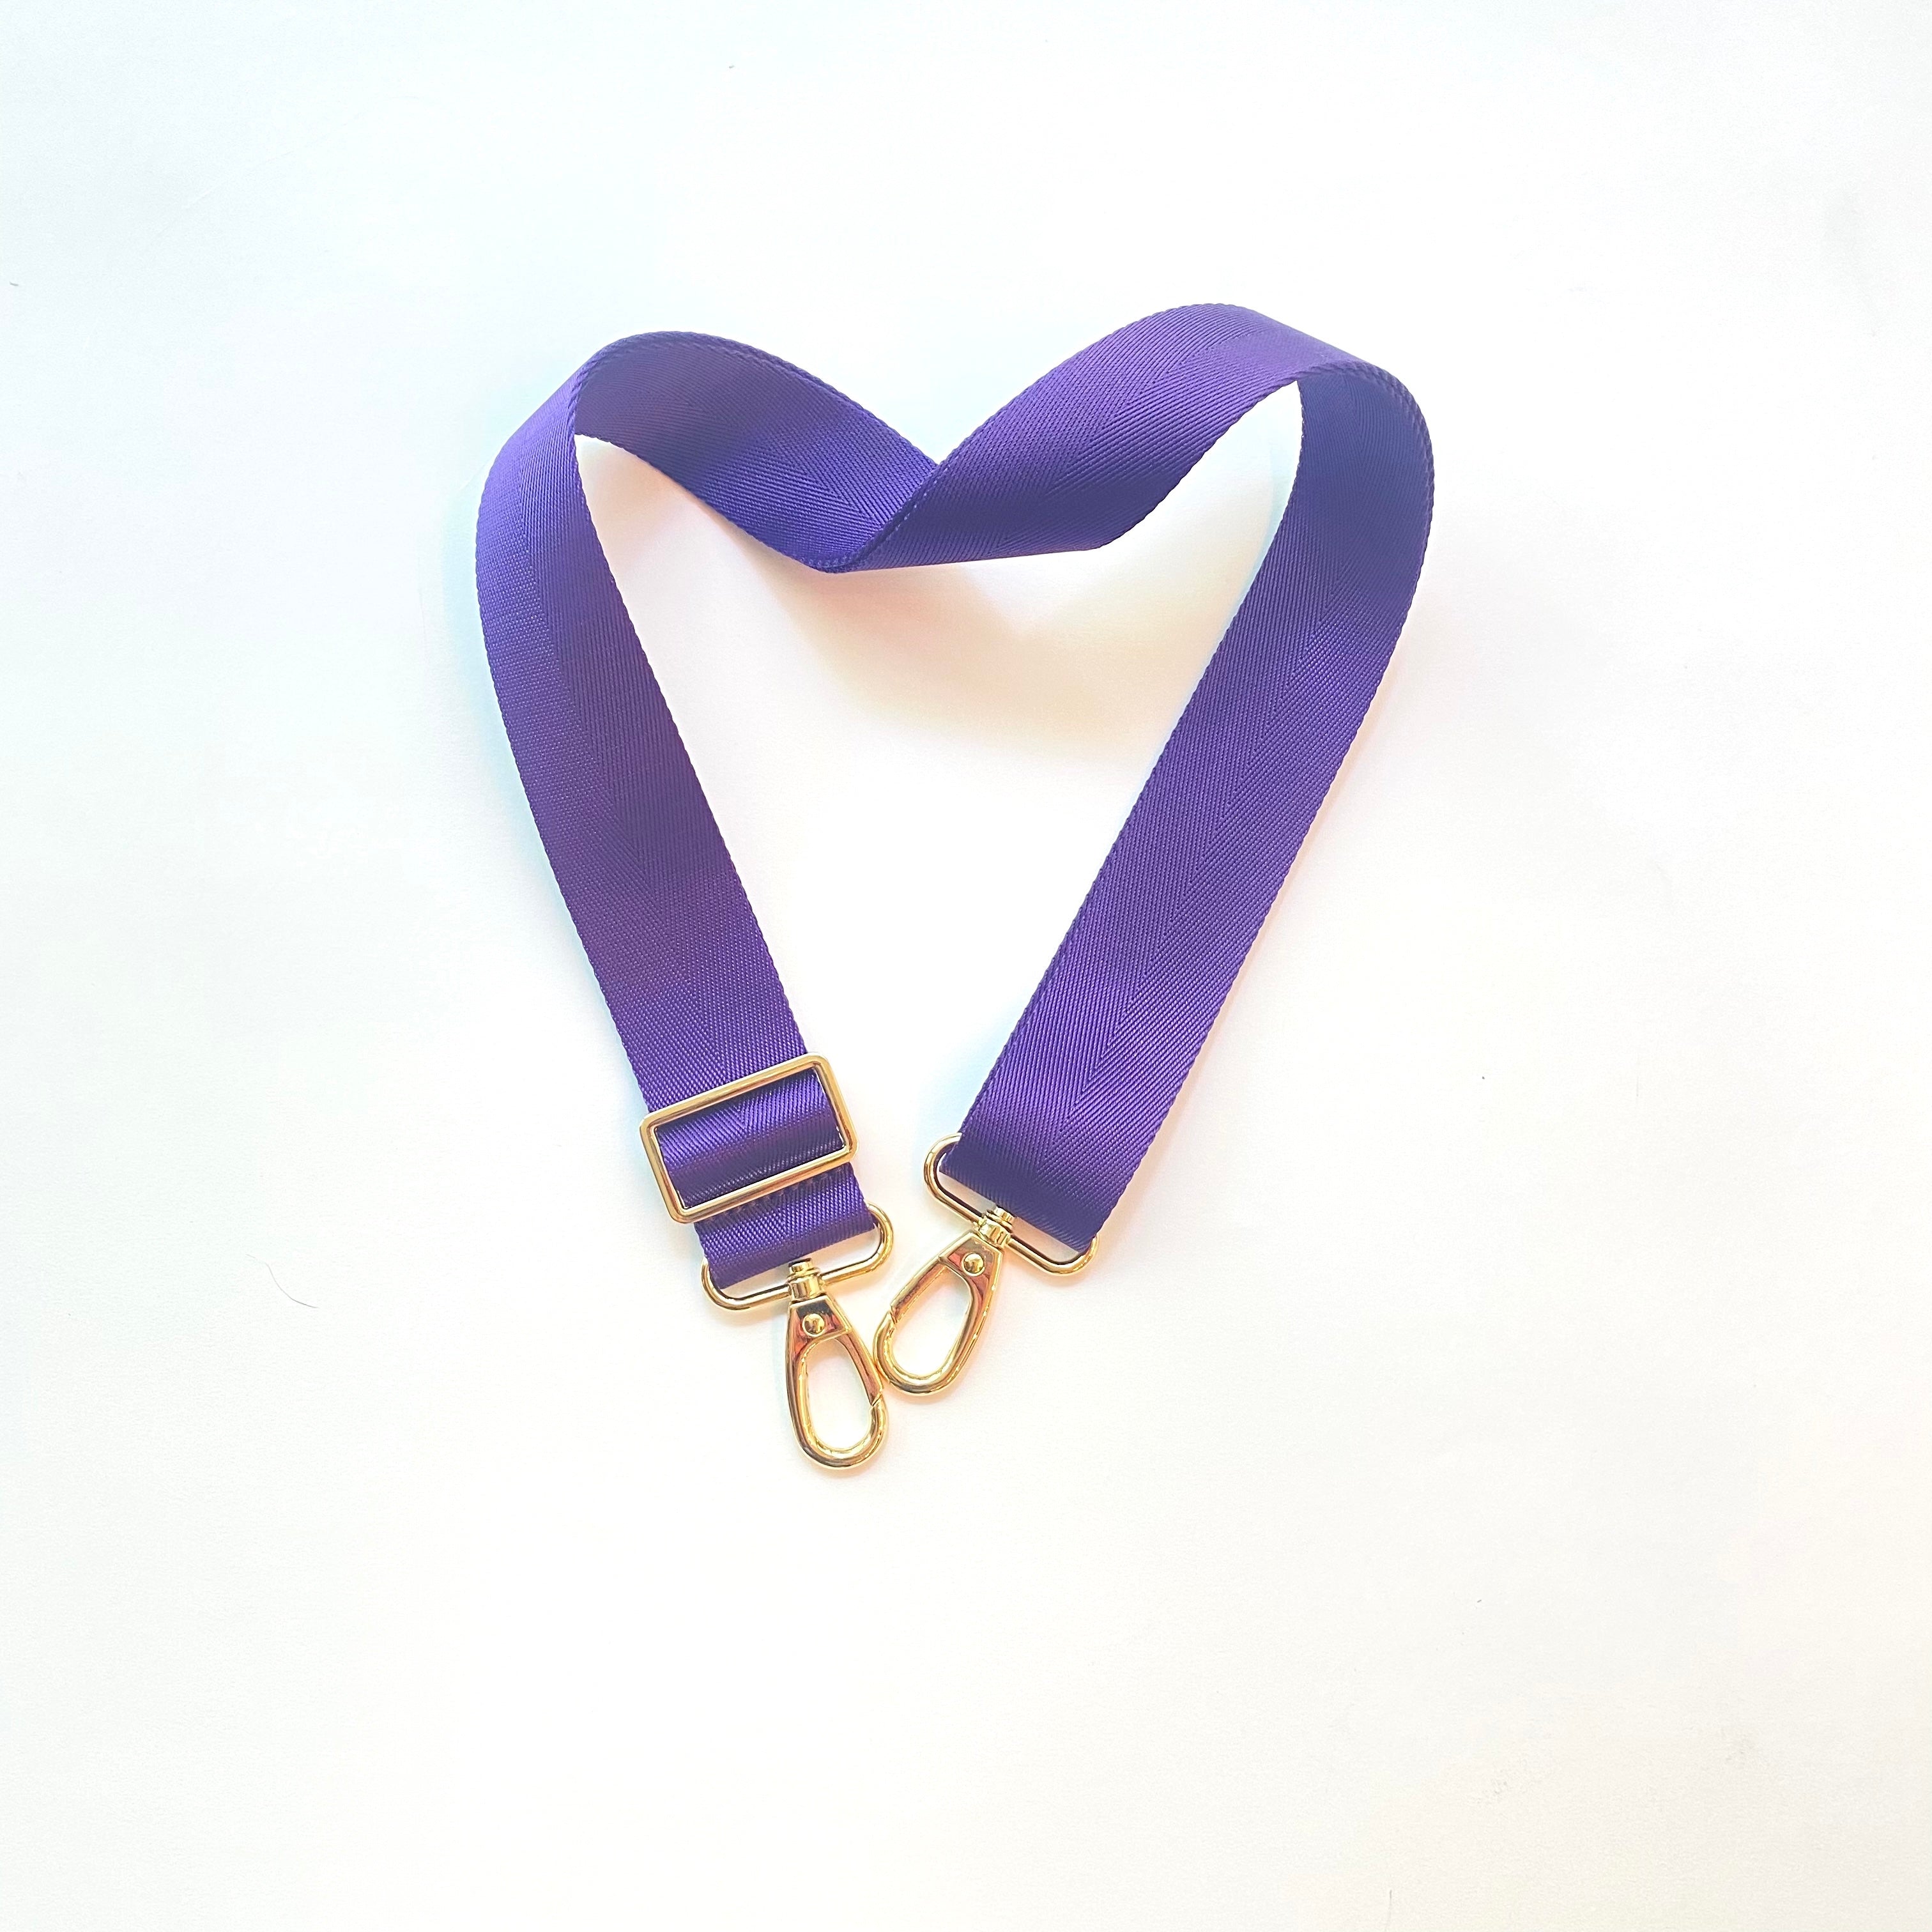 Skyler Blue’s adjustable, nylon webbing purple shoulder or crossbody strap with herringbone weave and gold hardware.  